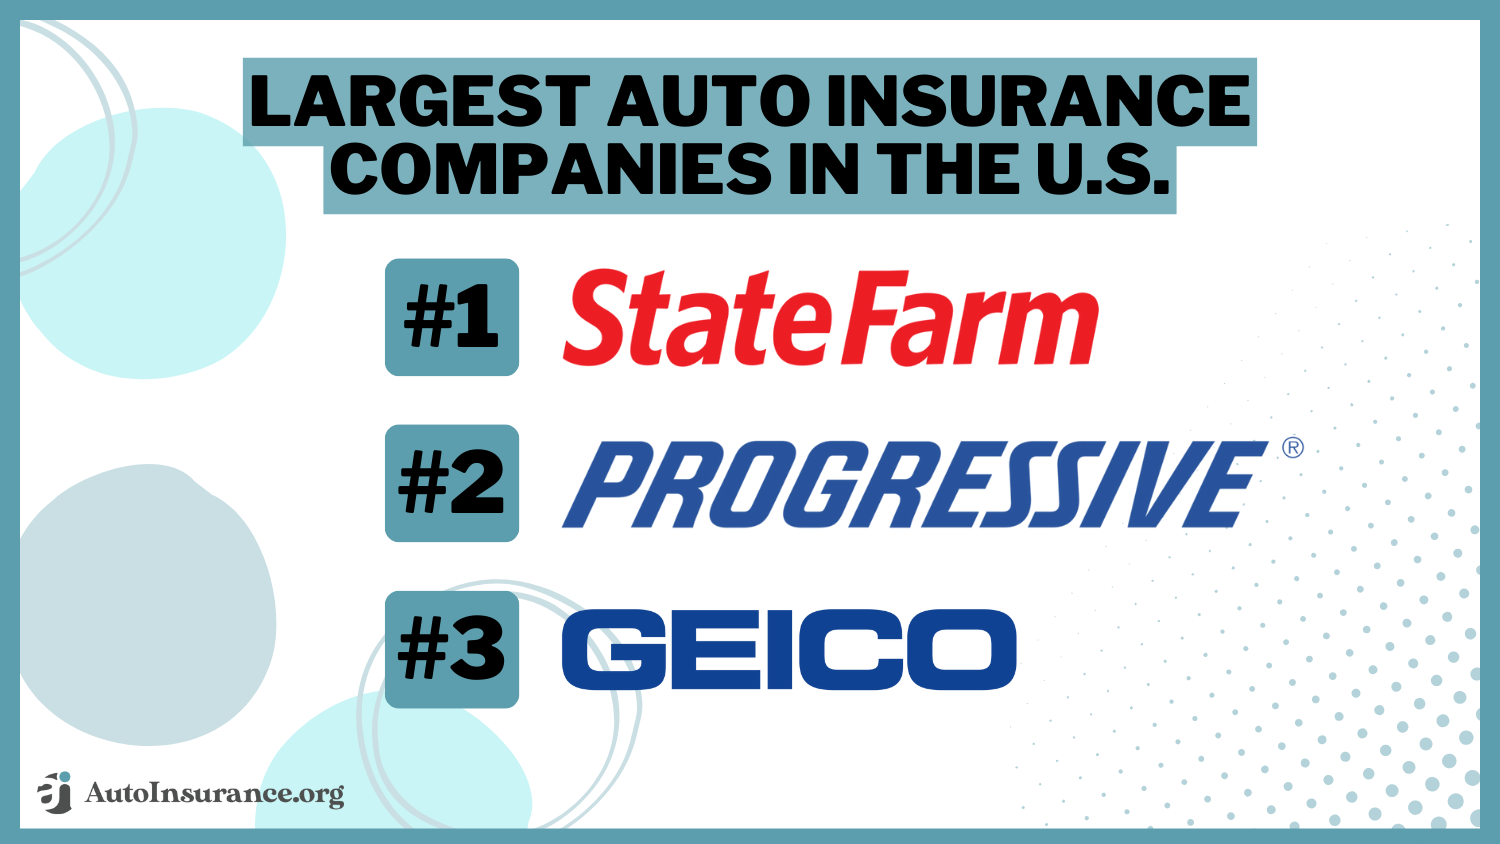 state farm progressive Geico Largest Auto Insurance Companies in the U.S.